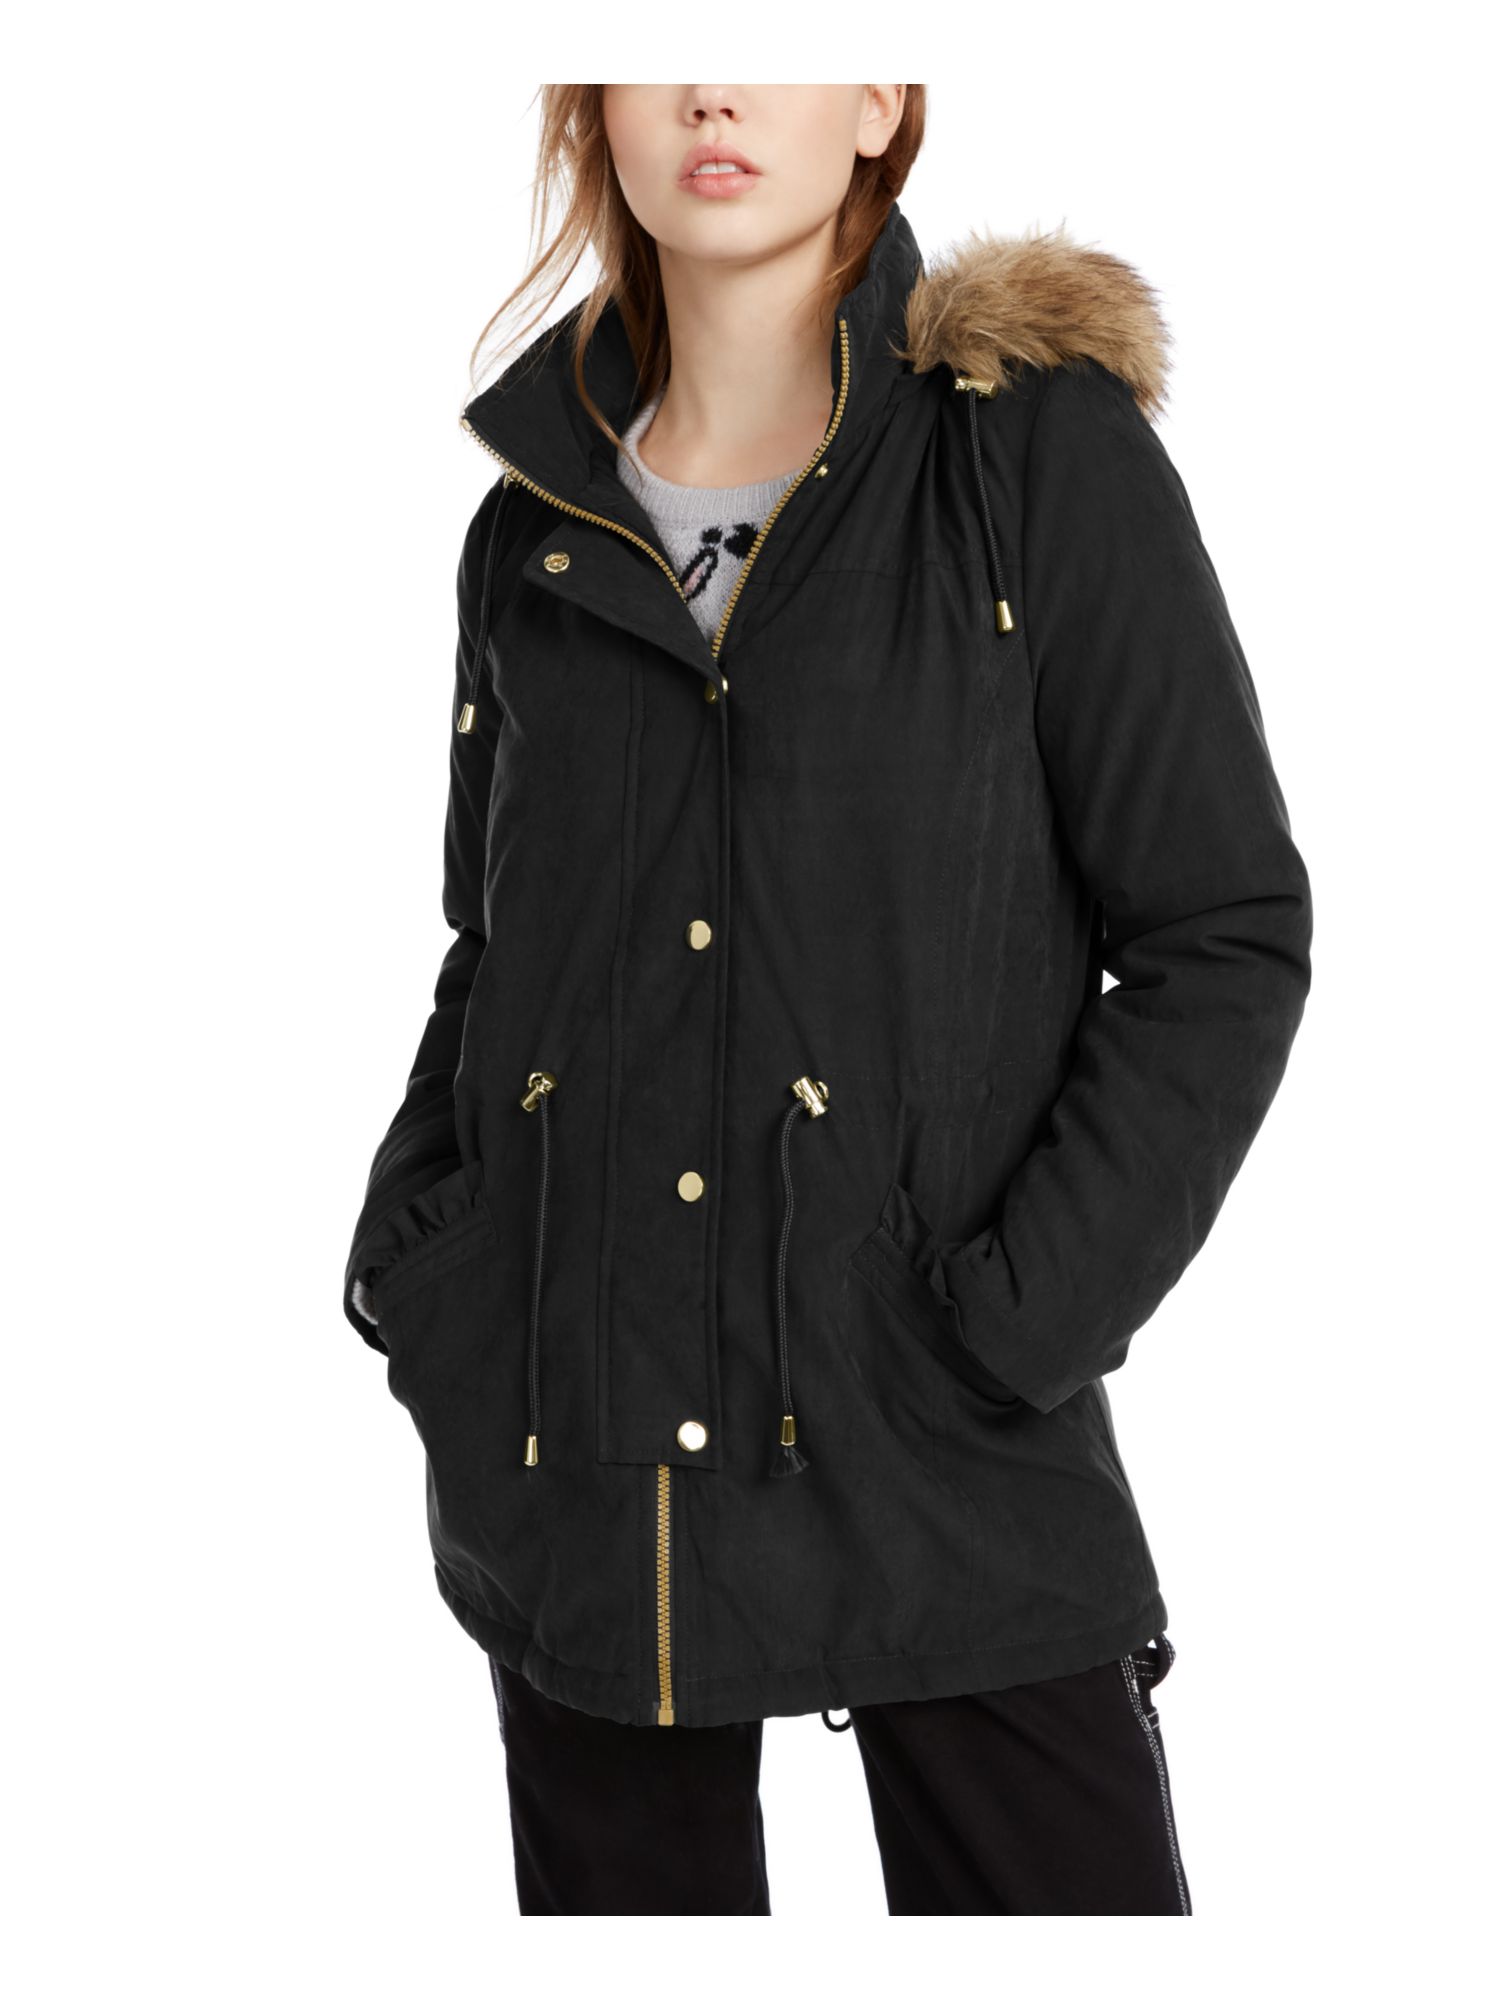 CELEBRITY PINK Womens Black Faux Fur Hood Parka Winter Jacket Coat Juniors L - image 1 of 4